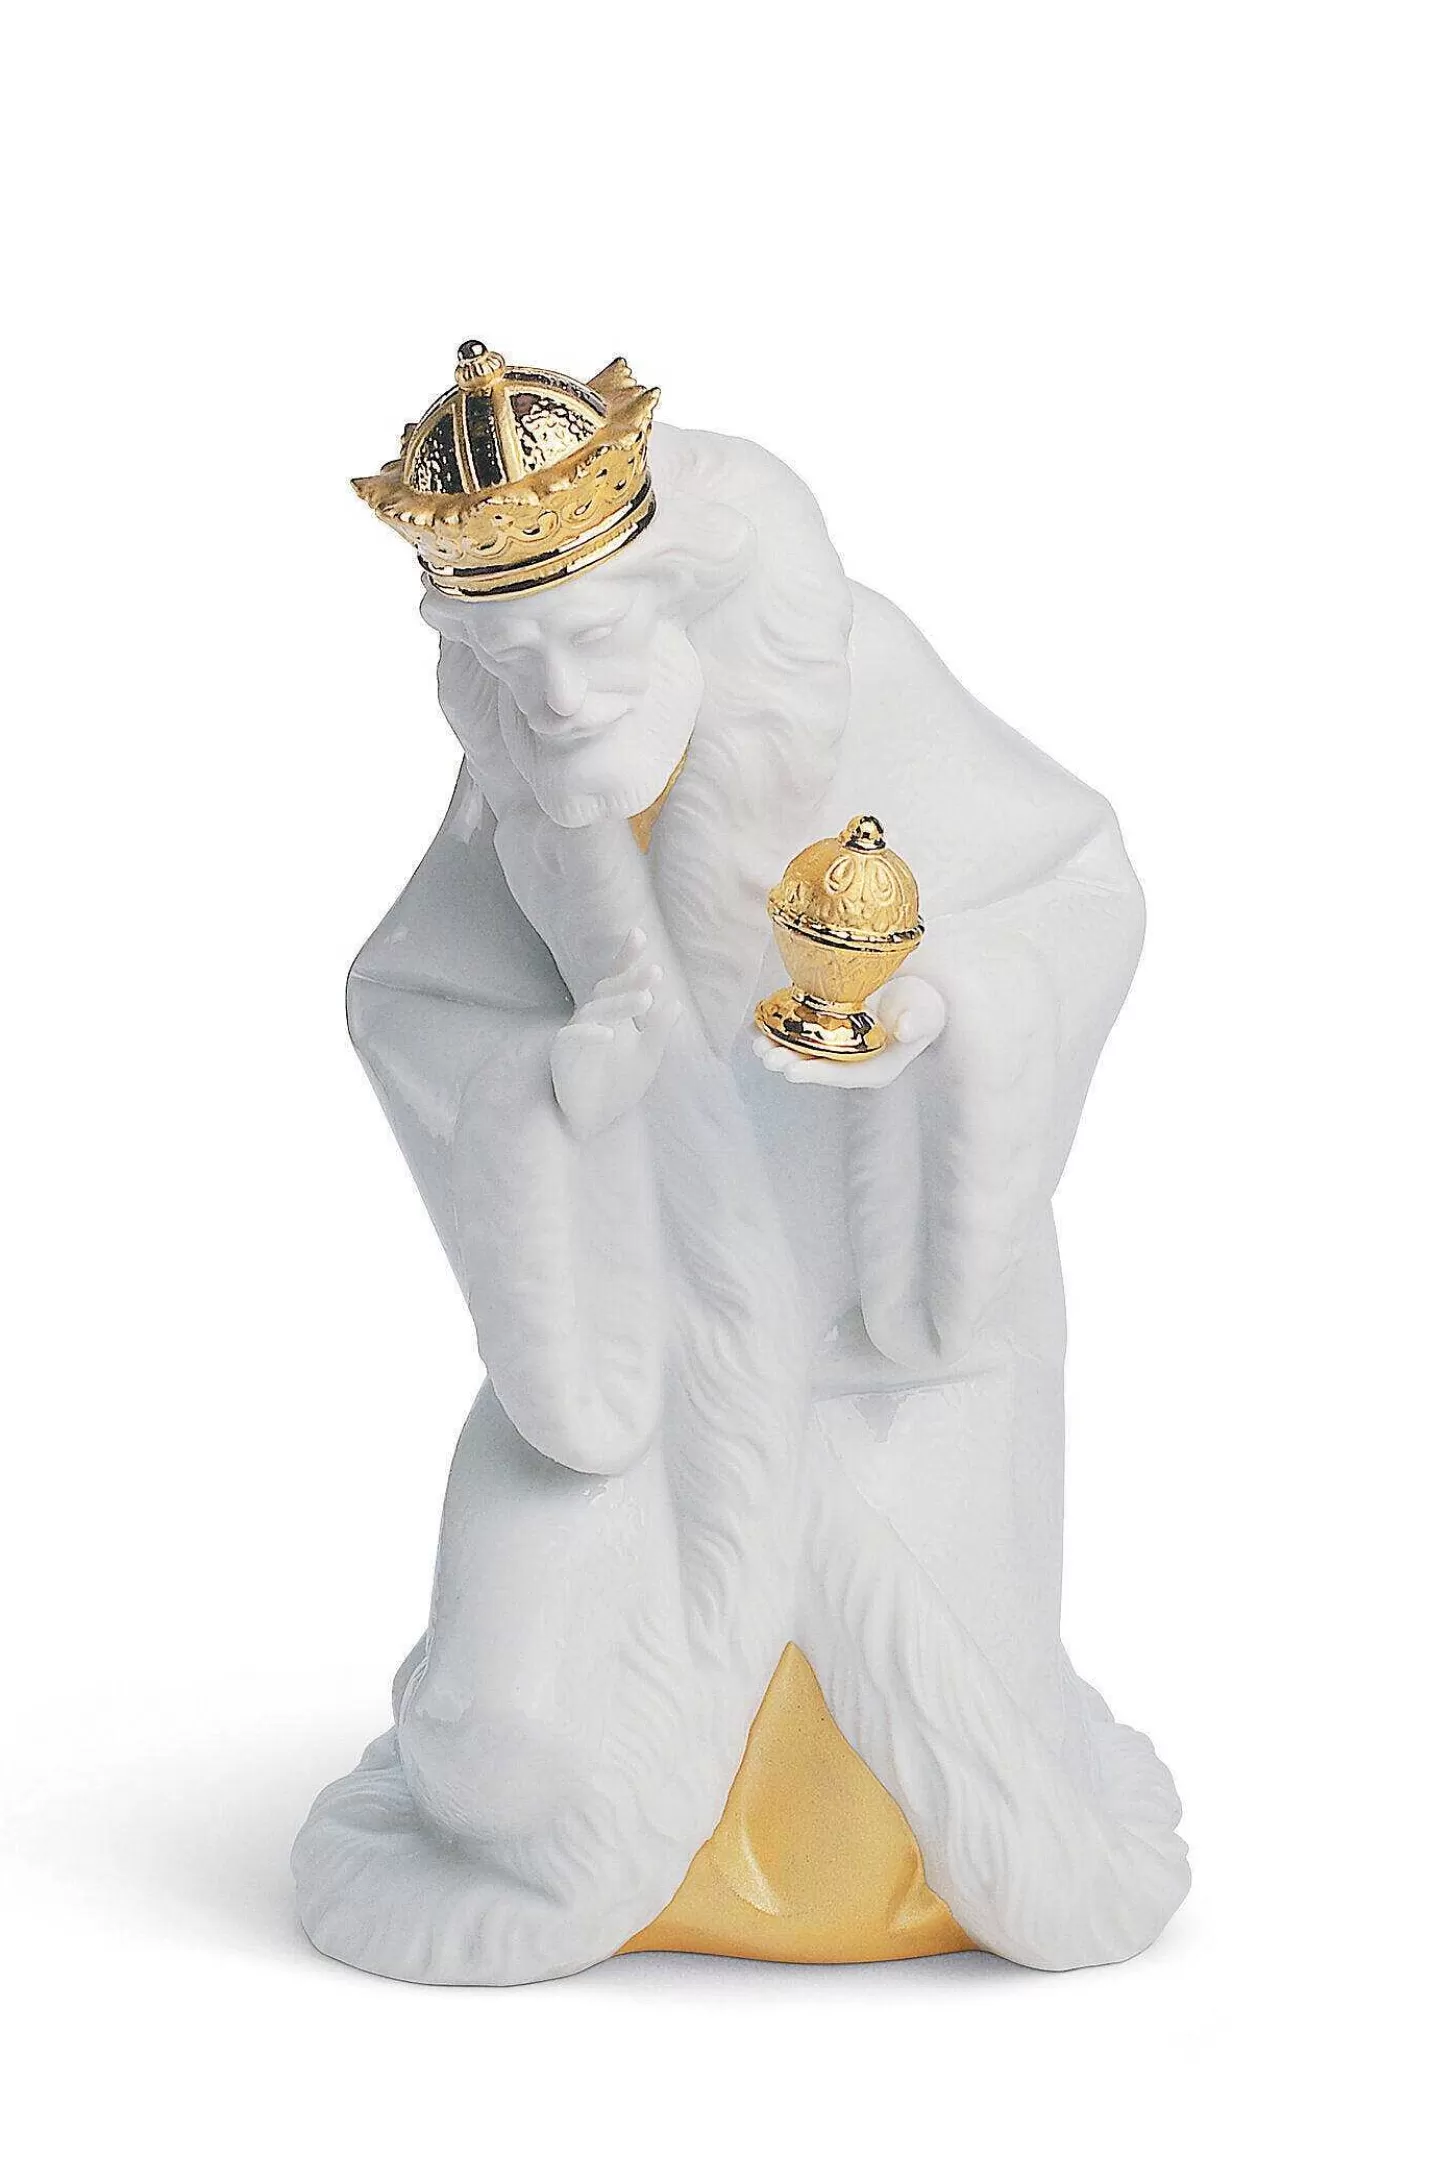 Lladró King Melchior Nativity Figurine. Golden Lustre^ Christianity